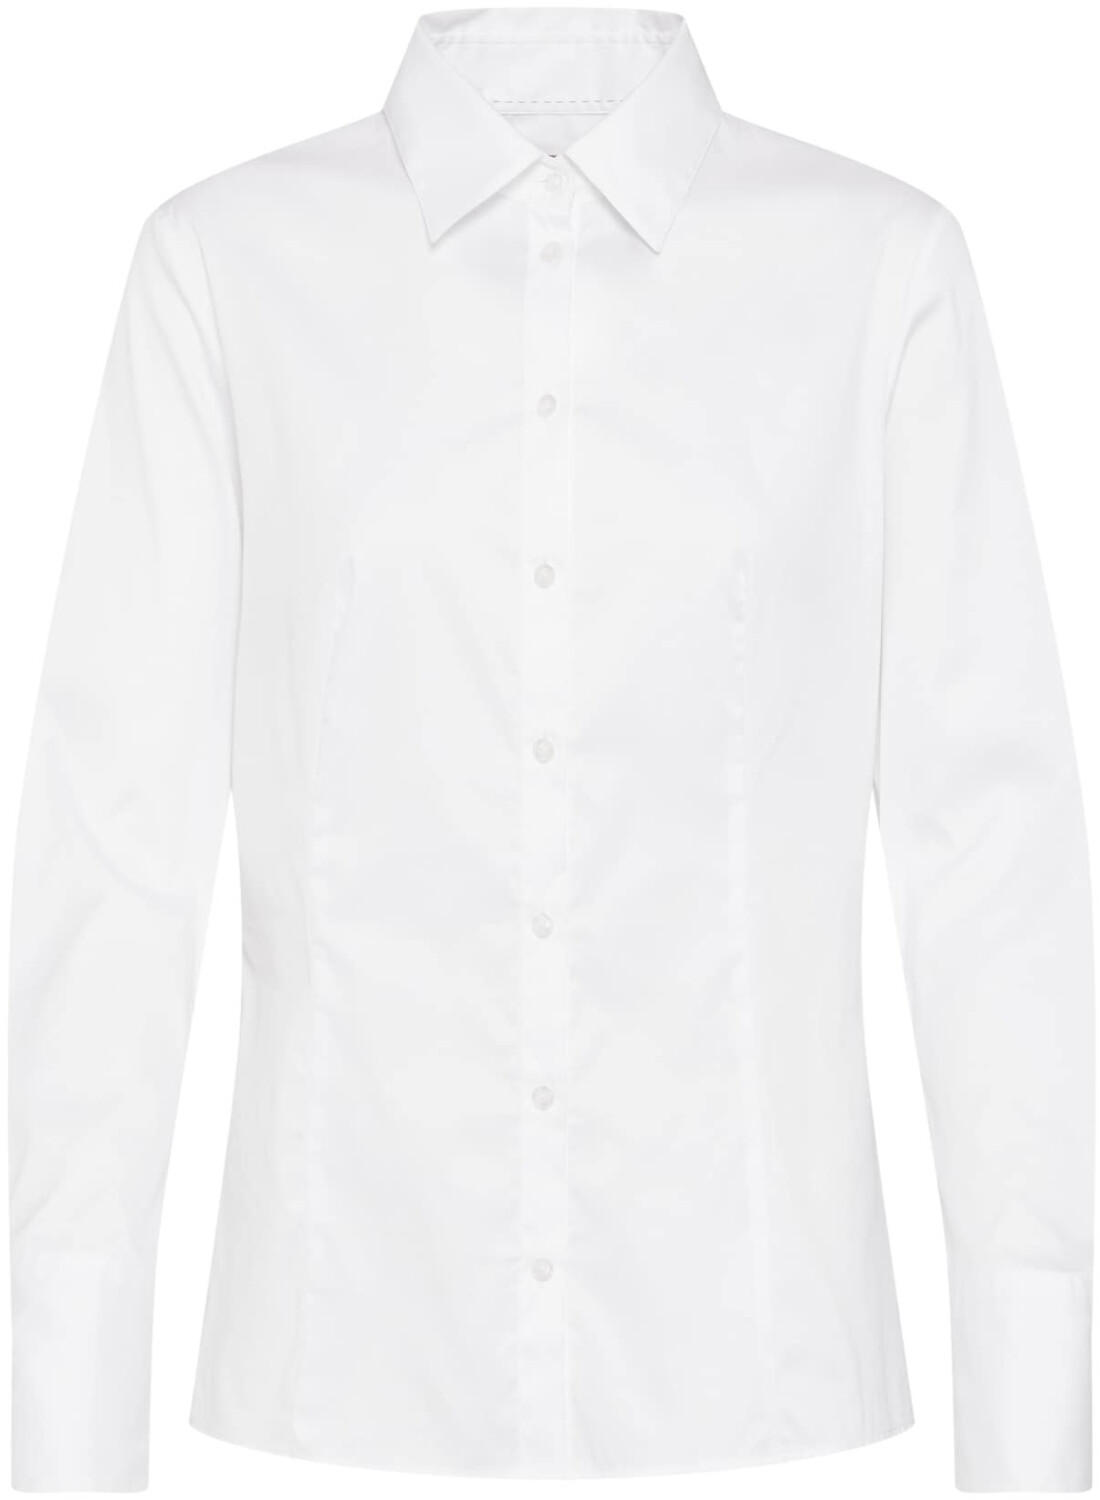 Hugo Boss The Fitted Shirt white (50416895-100)